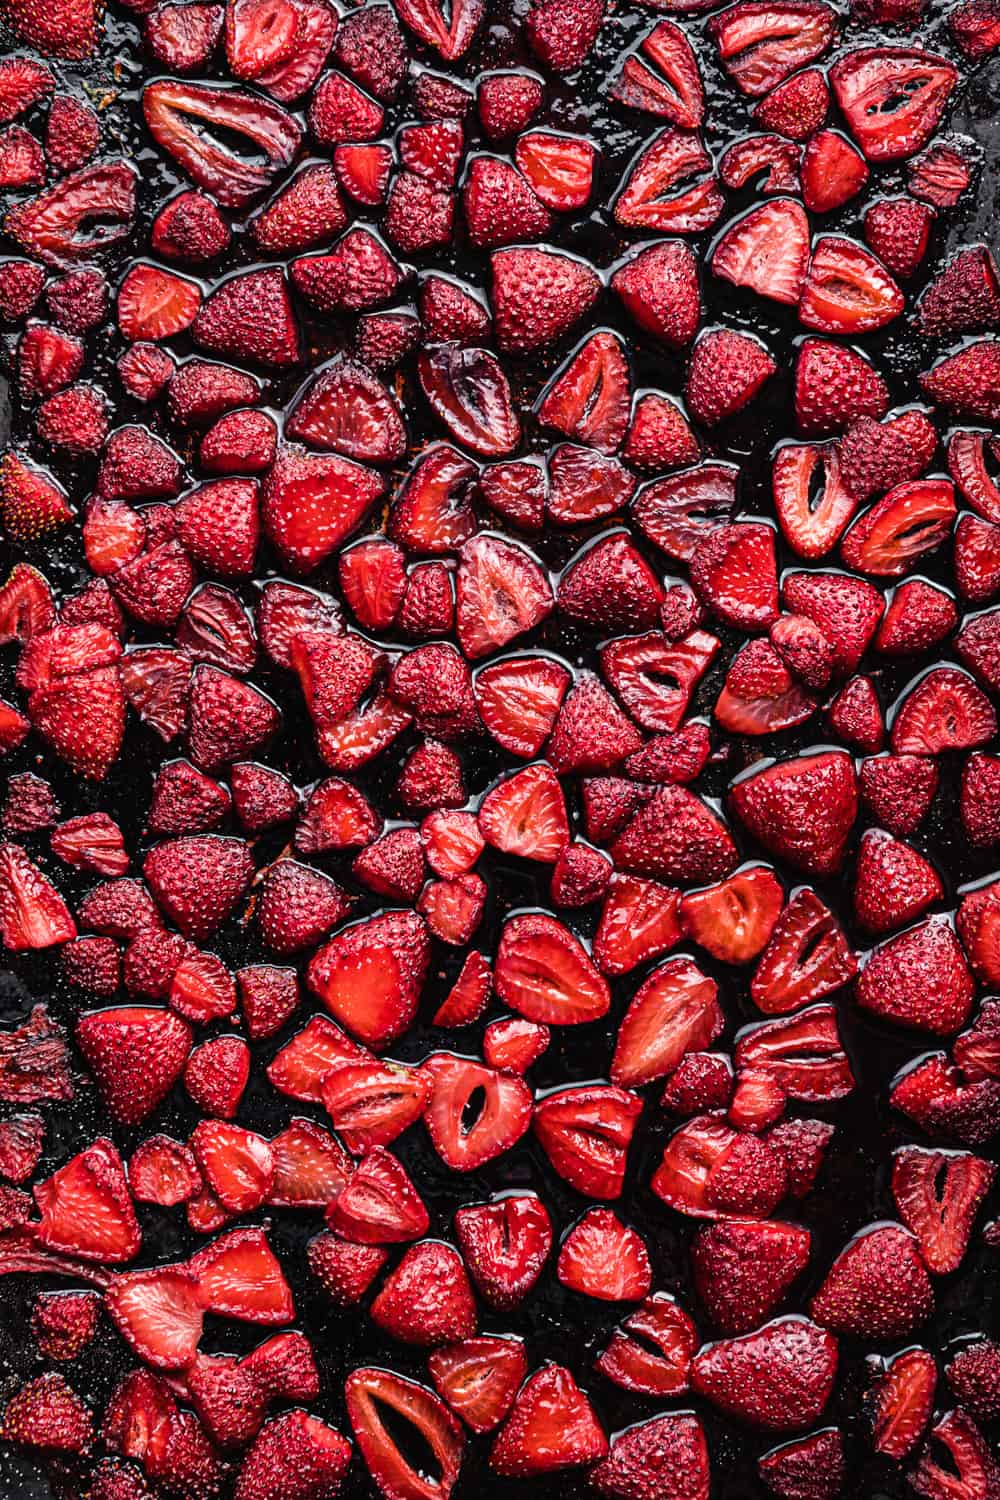 roasted strawberries on a baking sheet; overhead shot.